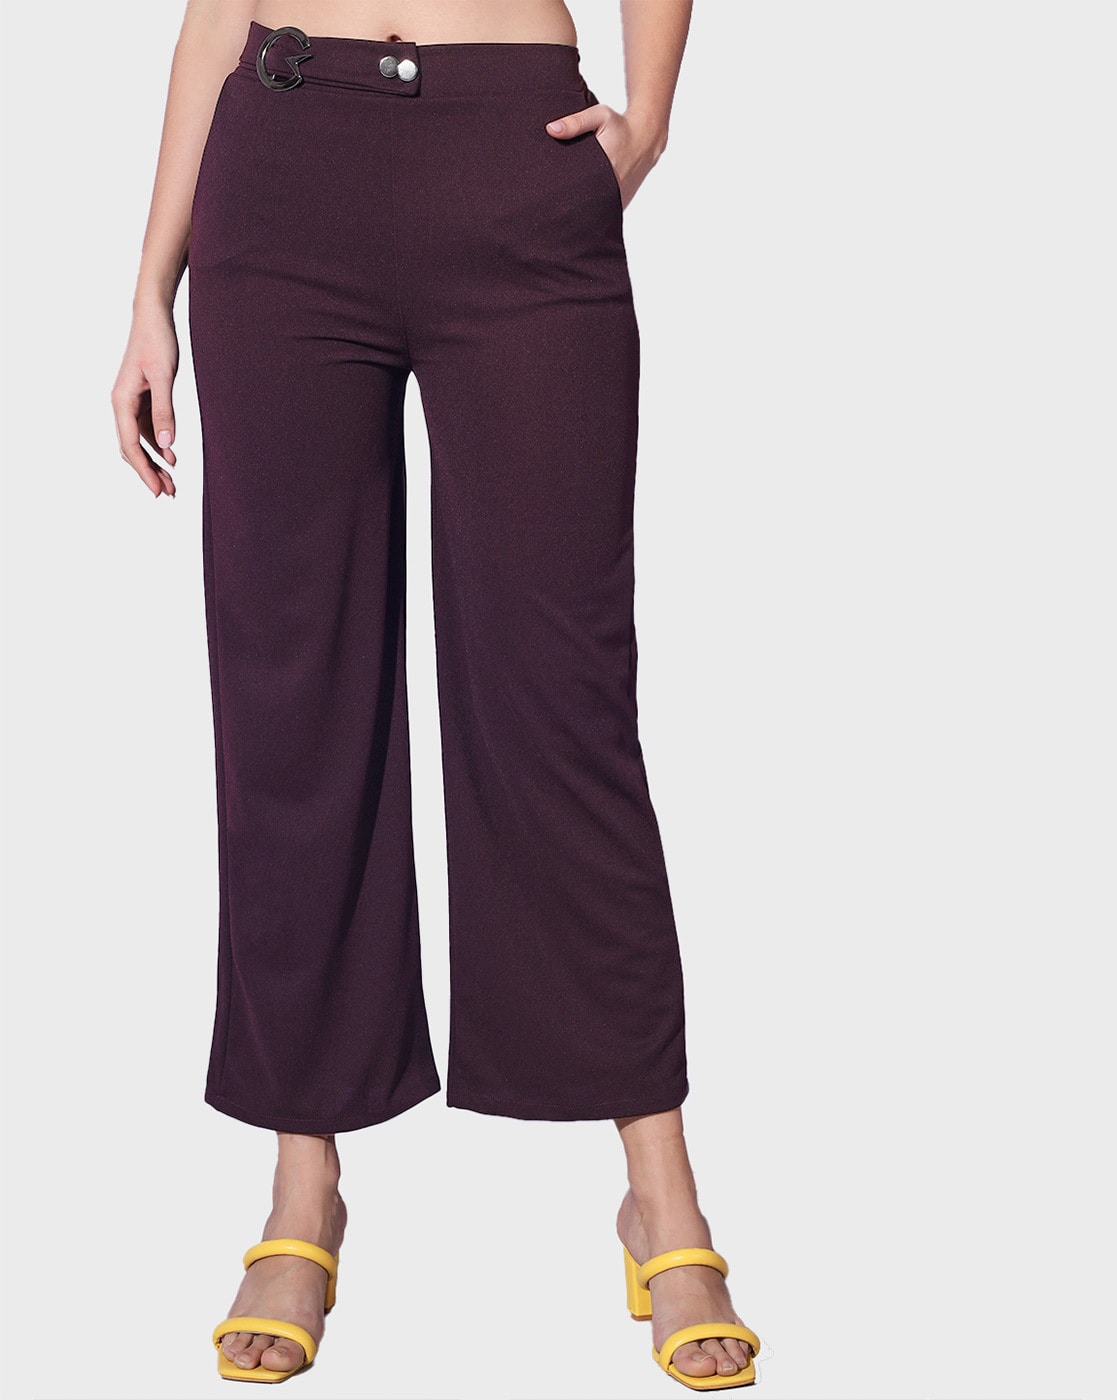 Buy Purple Trousers & Pants for Women by BUYNEWTREND Online